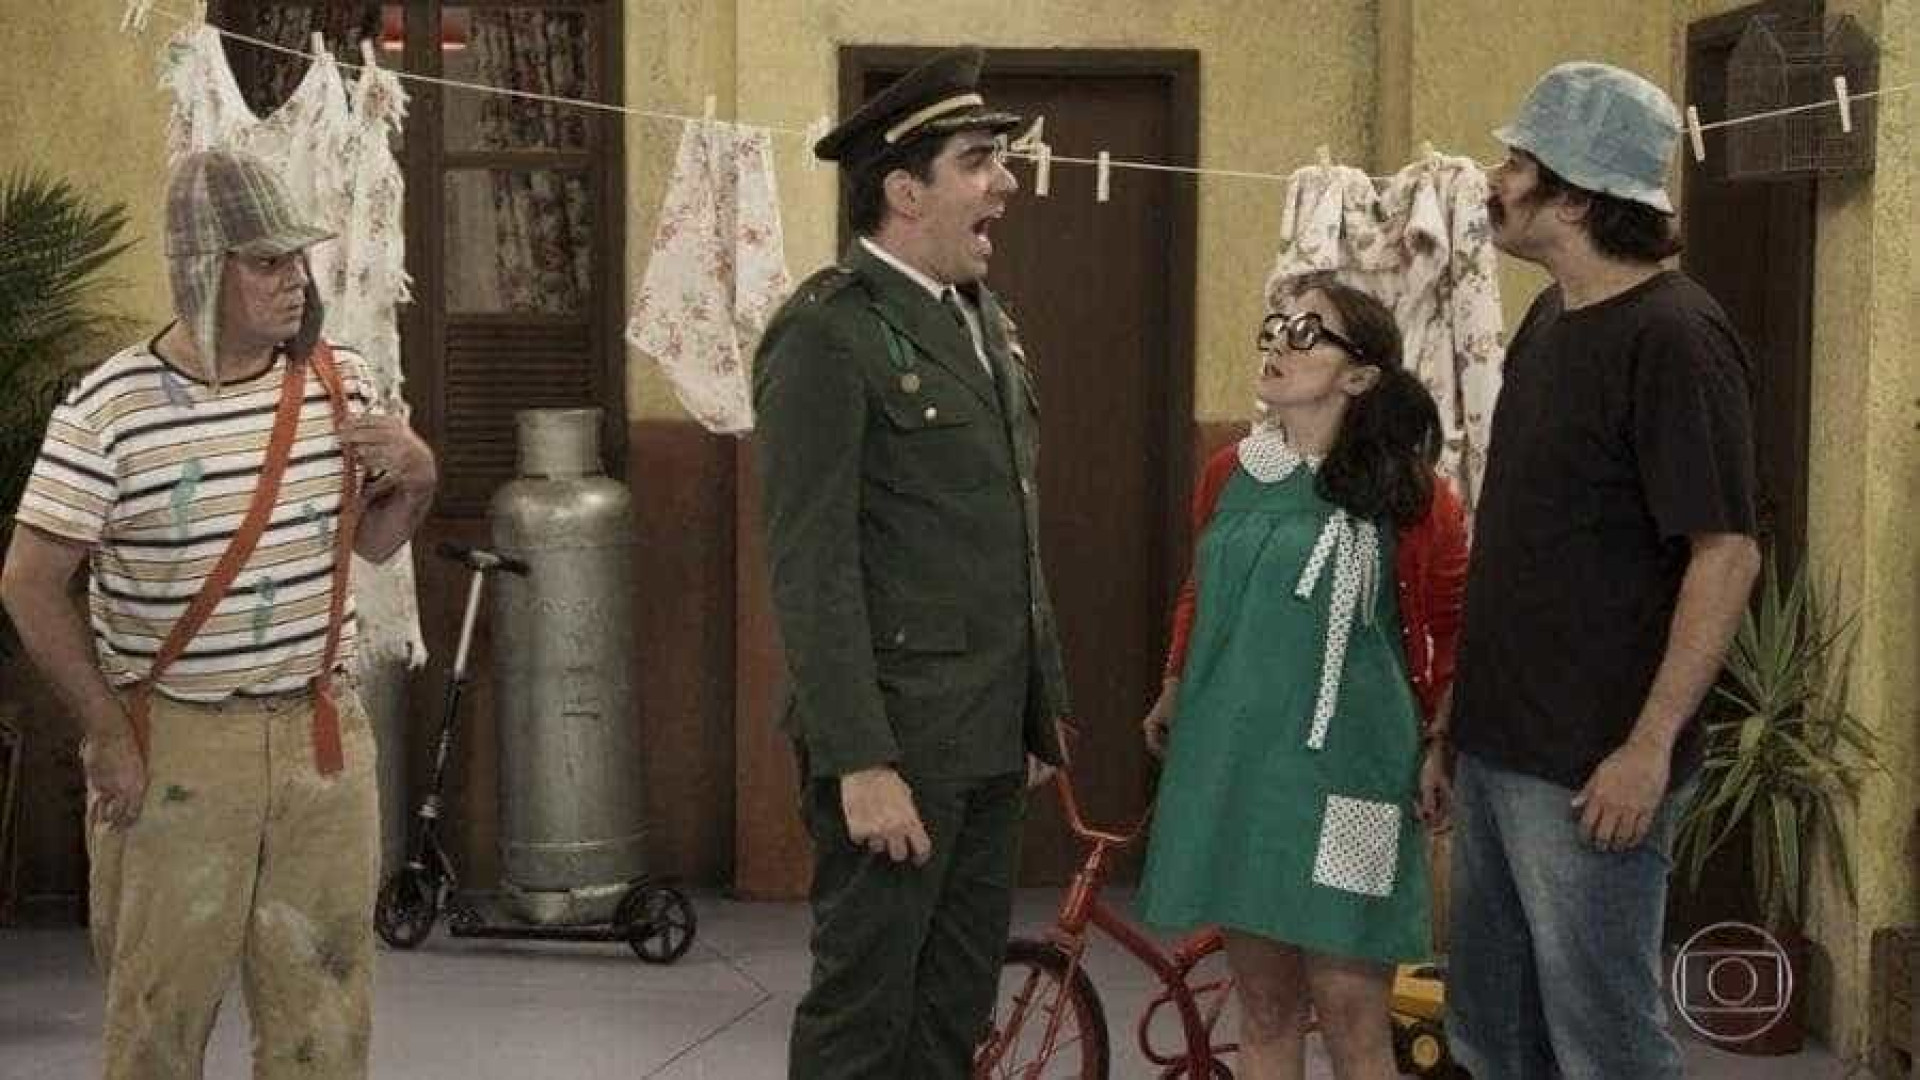 Grupo Chespirito reprova paródia de 'Chaves' na Globo